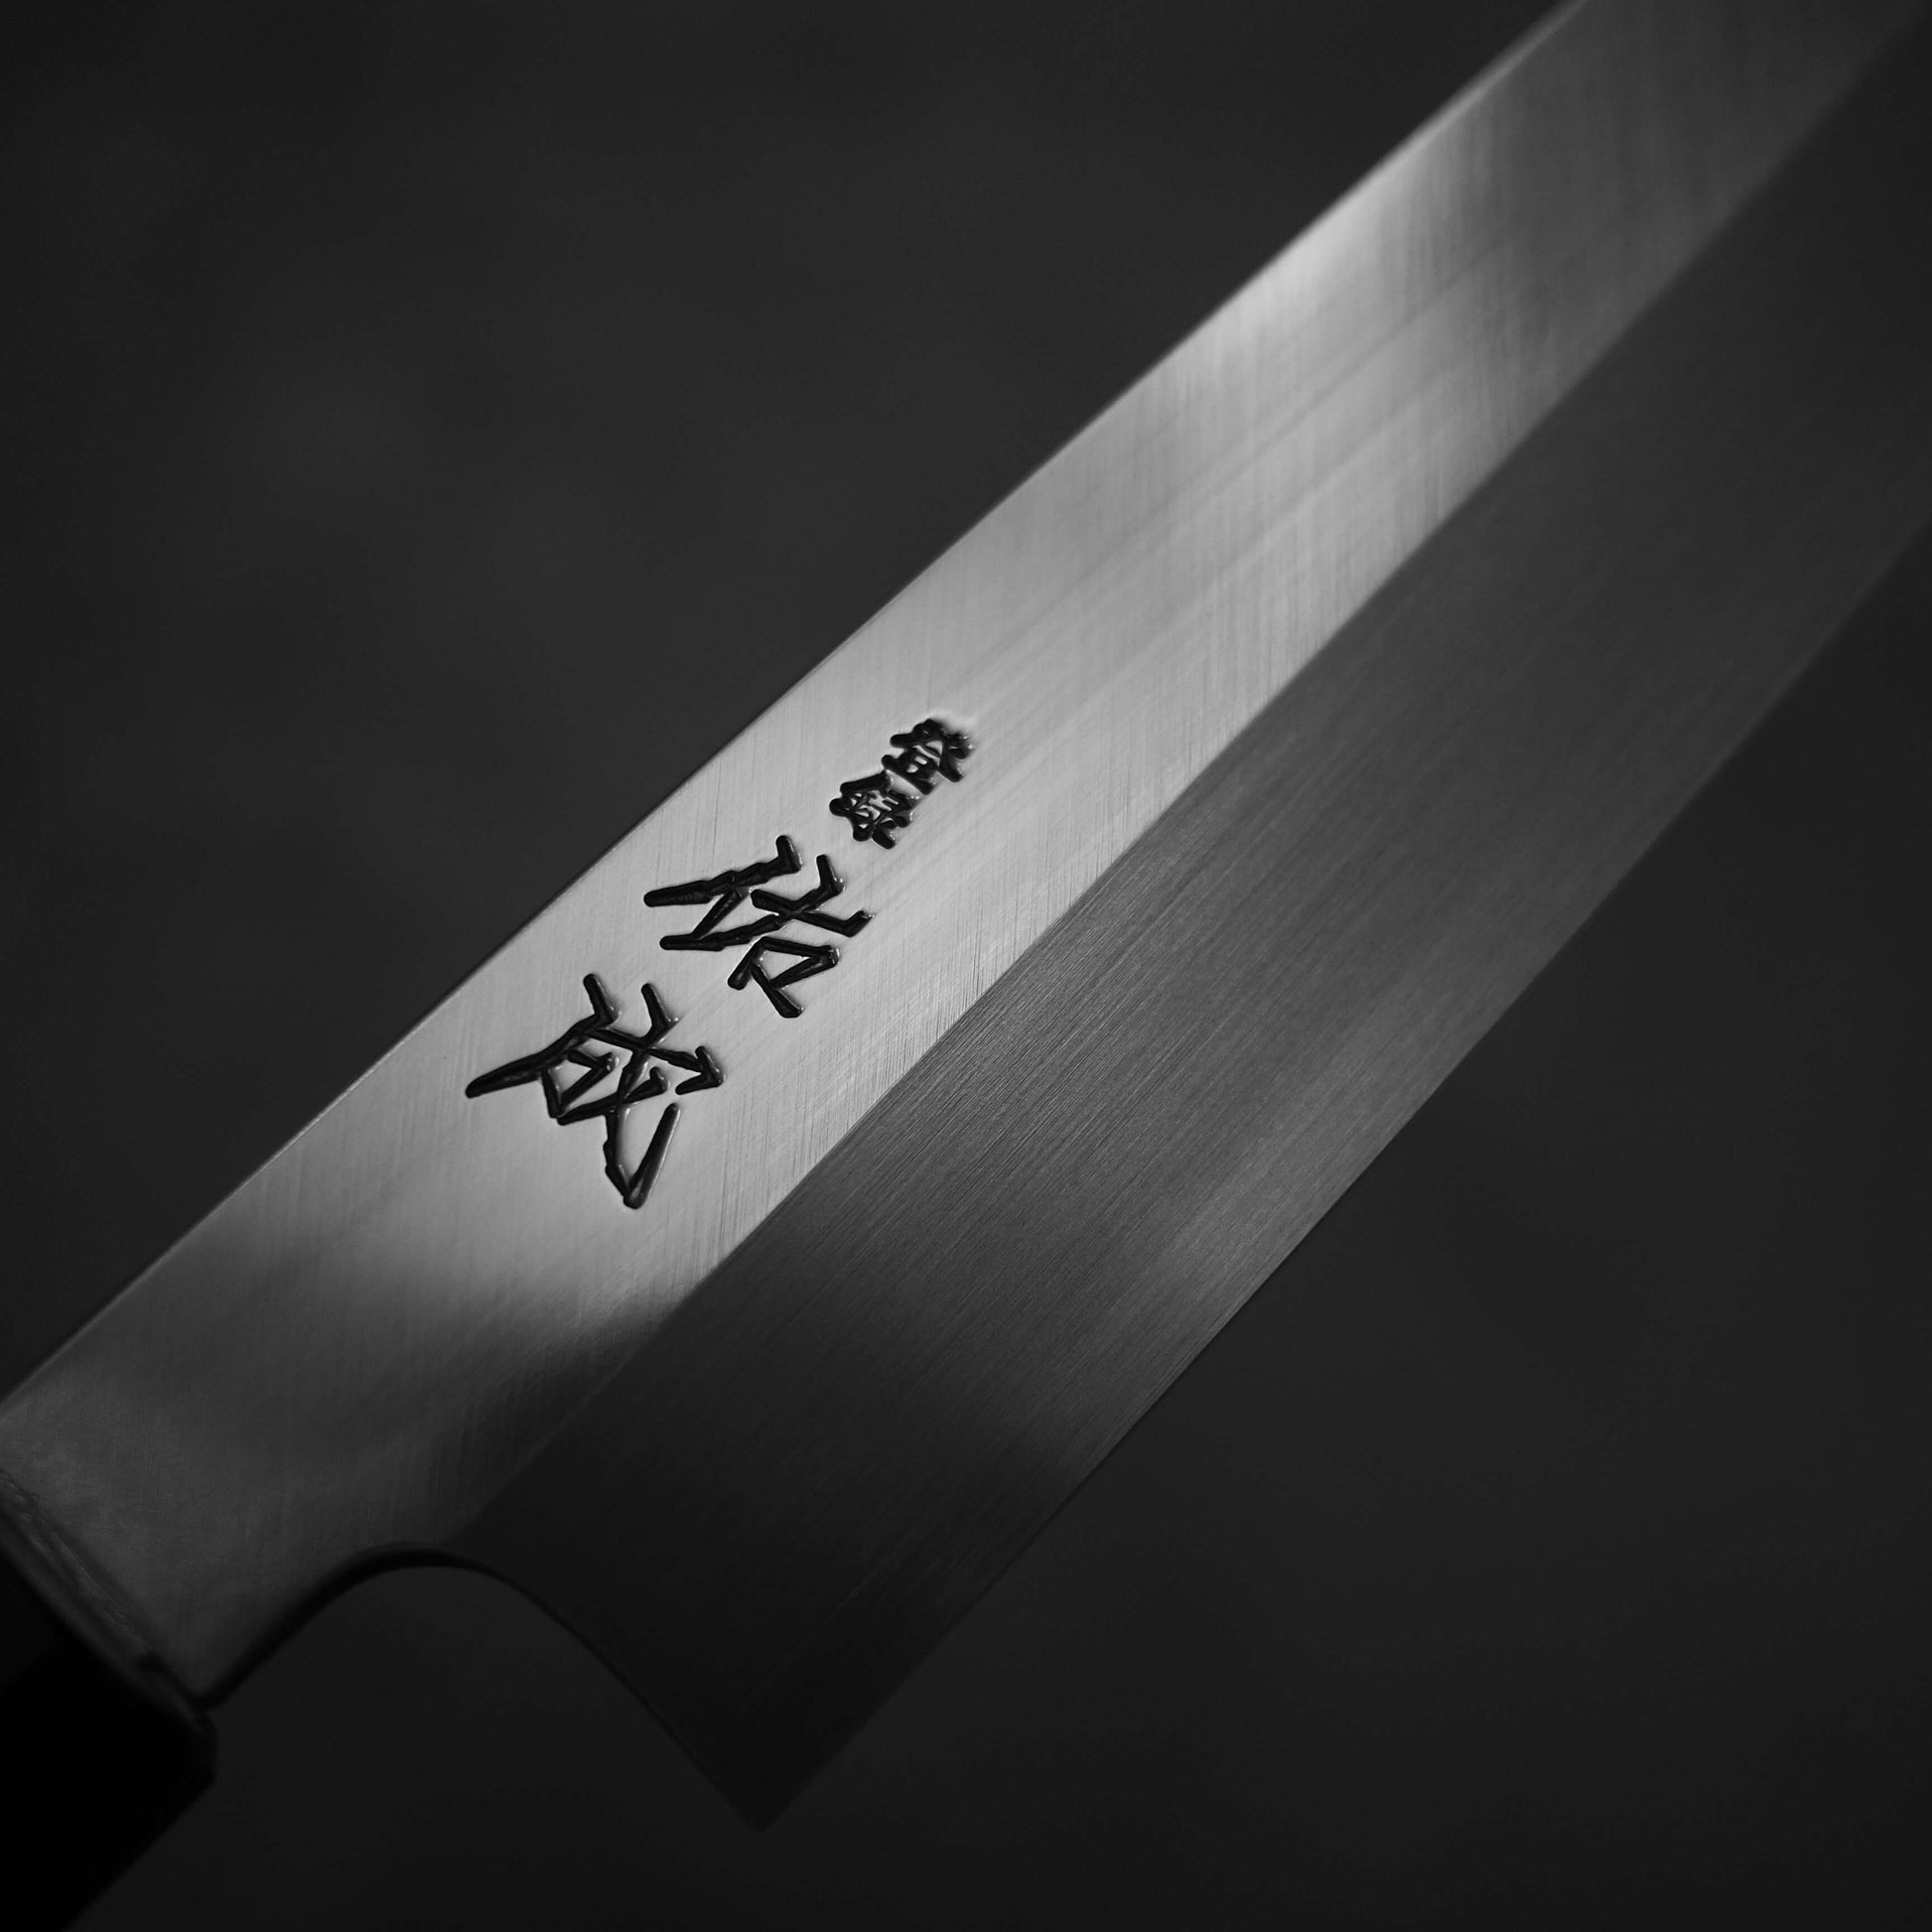 Sukenari honkasumi VG10 kiritsuke 240mm - Zahocho Japanese Knives